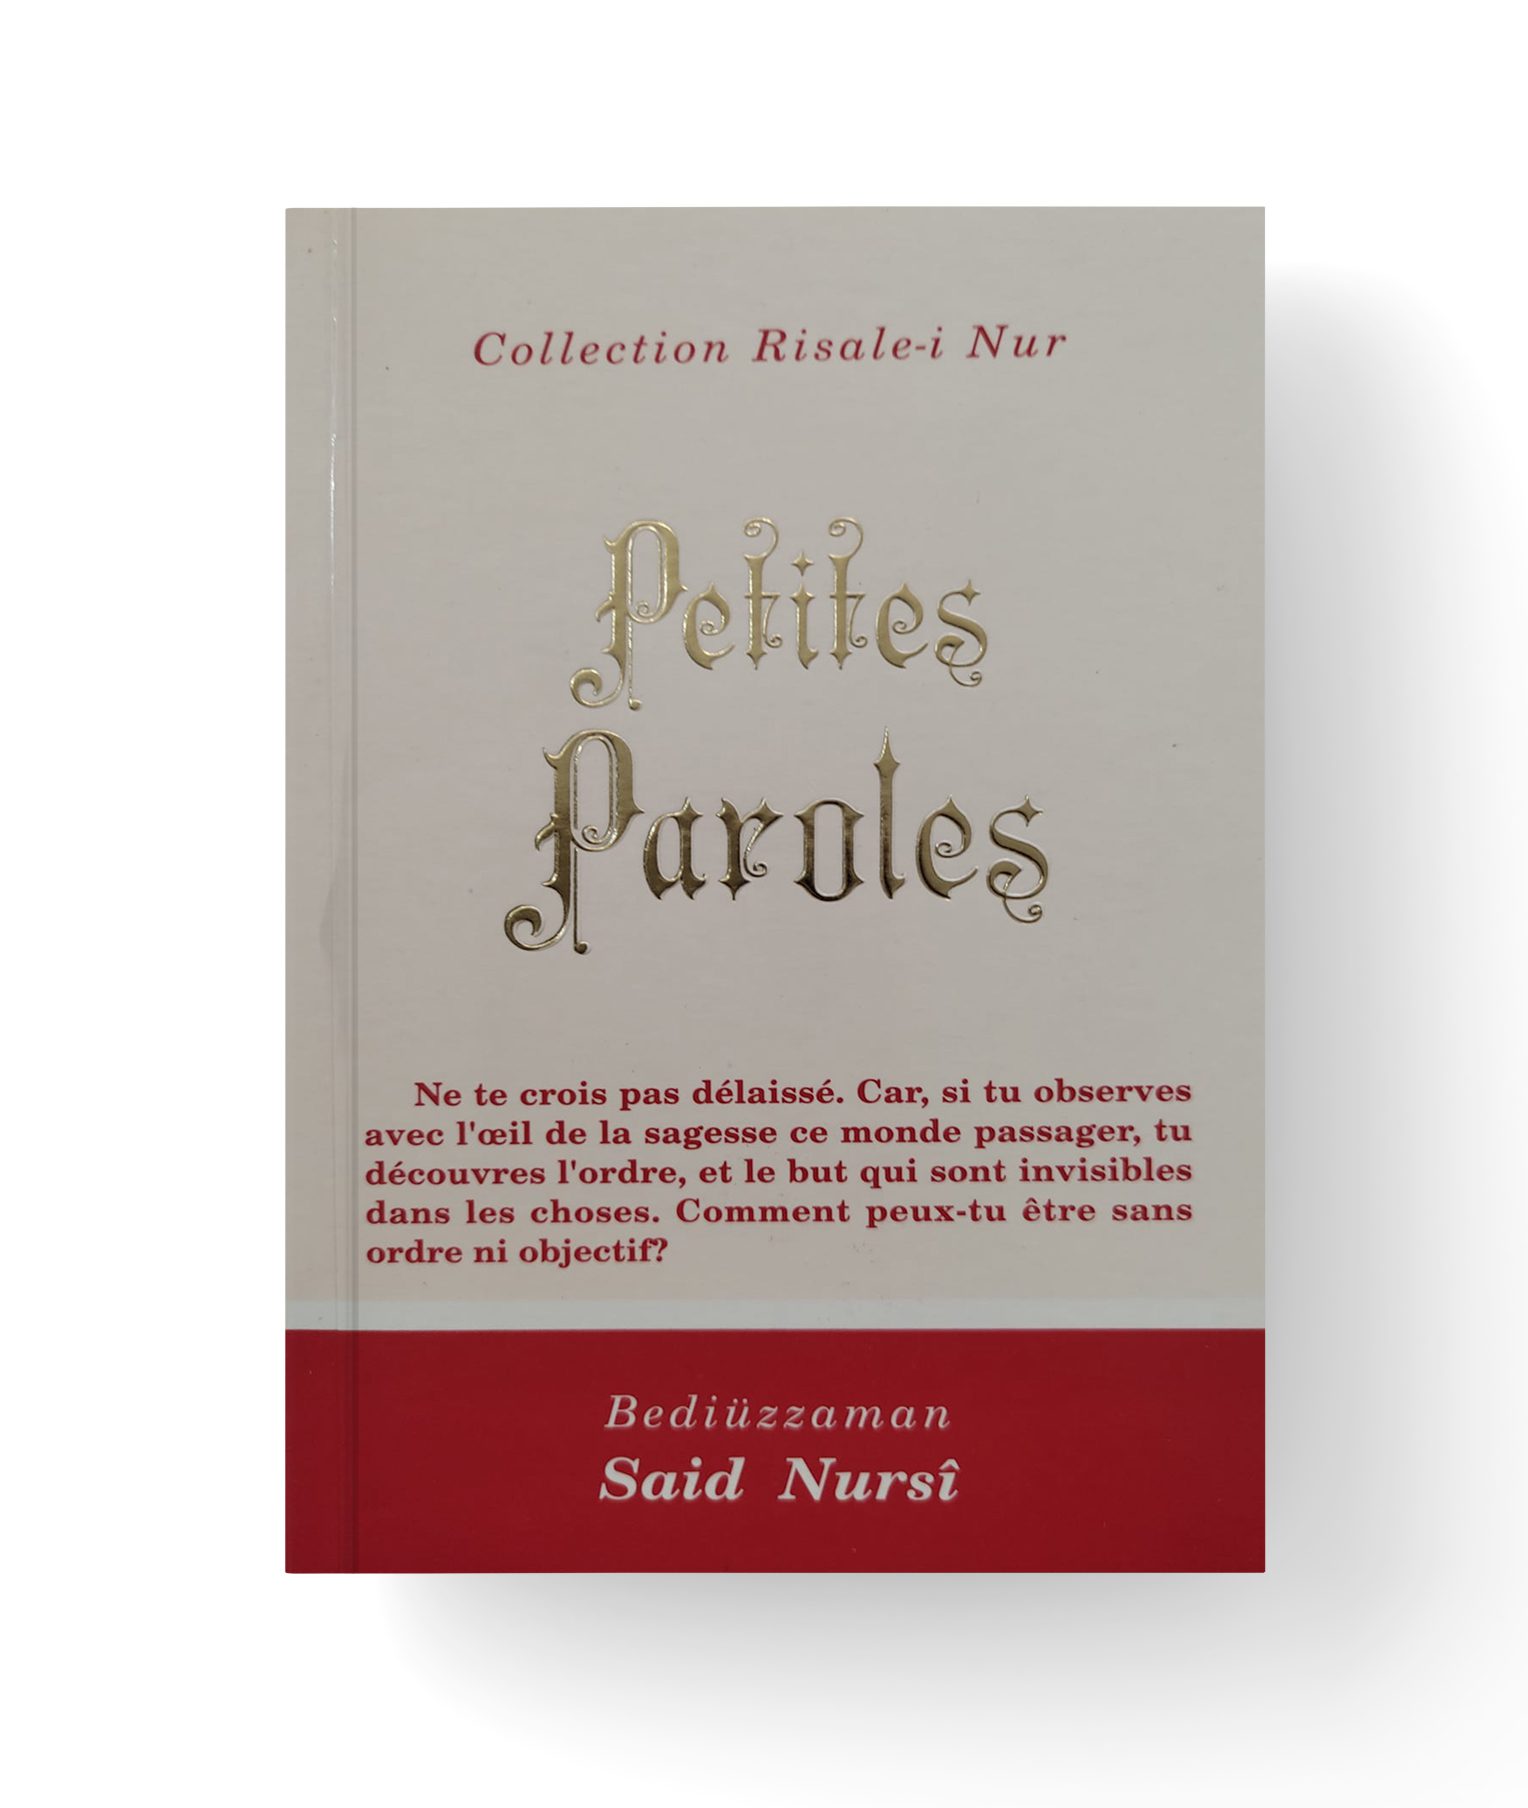 Collection Risale-i Nur Petites Paroles - Said Nursi - Envar Nasriyat Editions